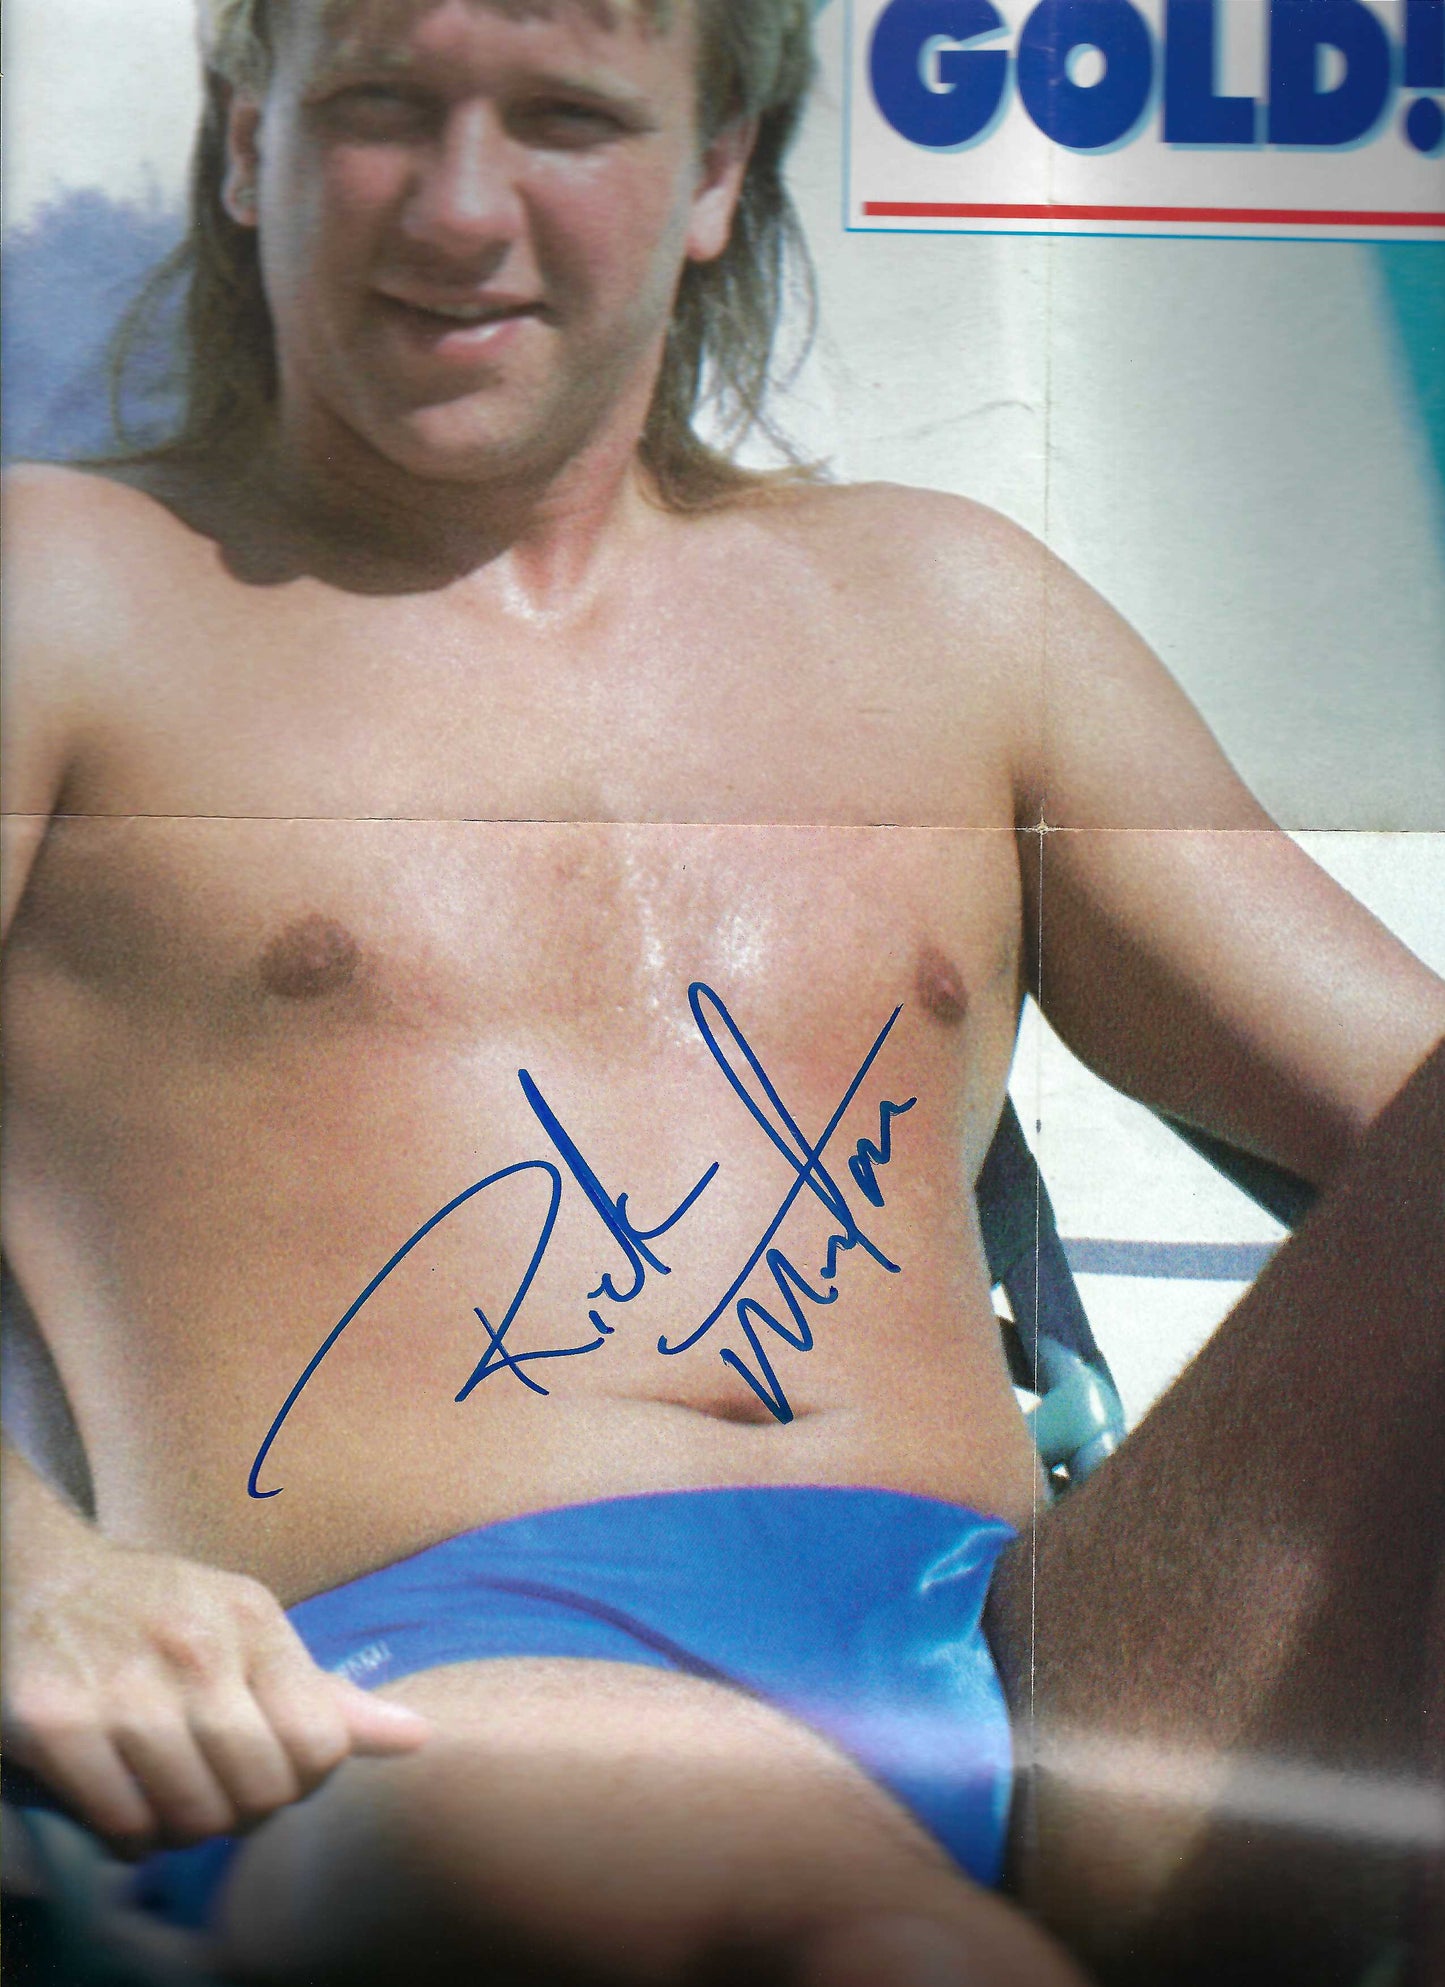 BD11 Ricky Steamboat X2 Rock and Roll Express 2X Masked Superstar  Nikita Koloff Autographed Vintage Wrestling Magazine / Program  w/COA